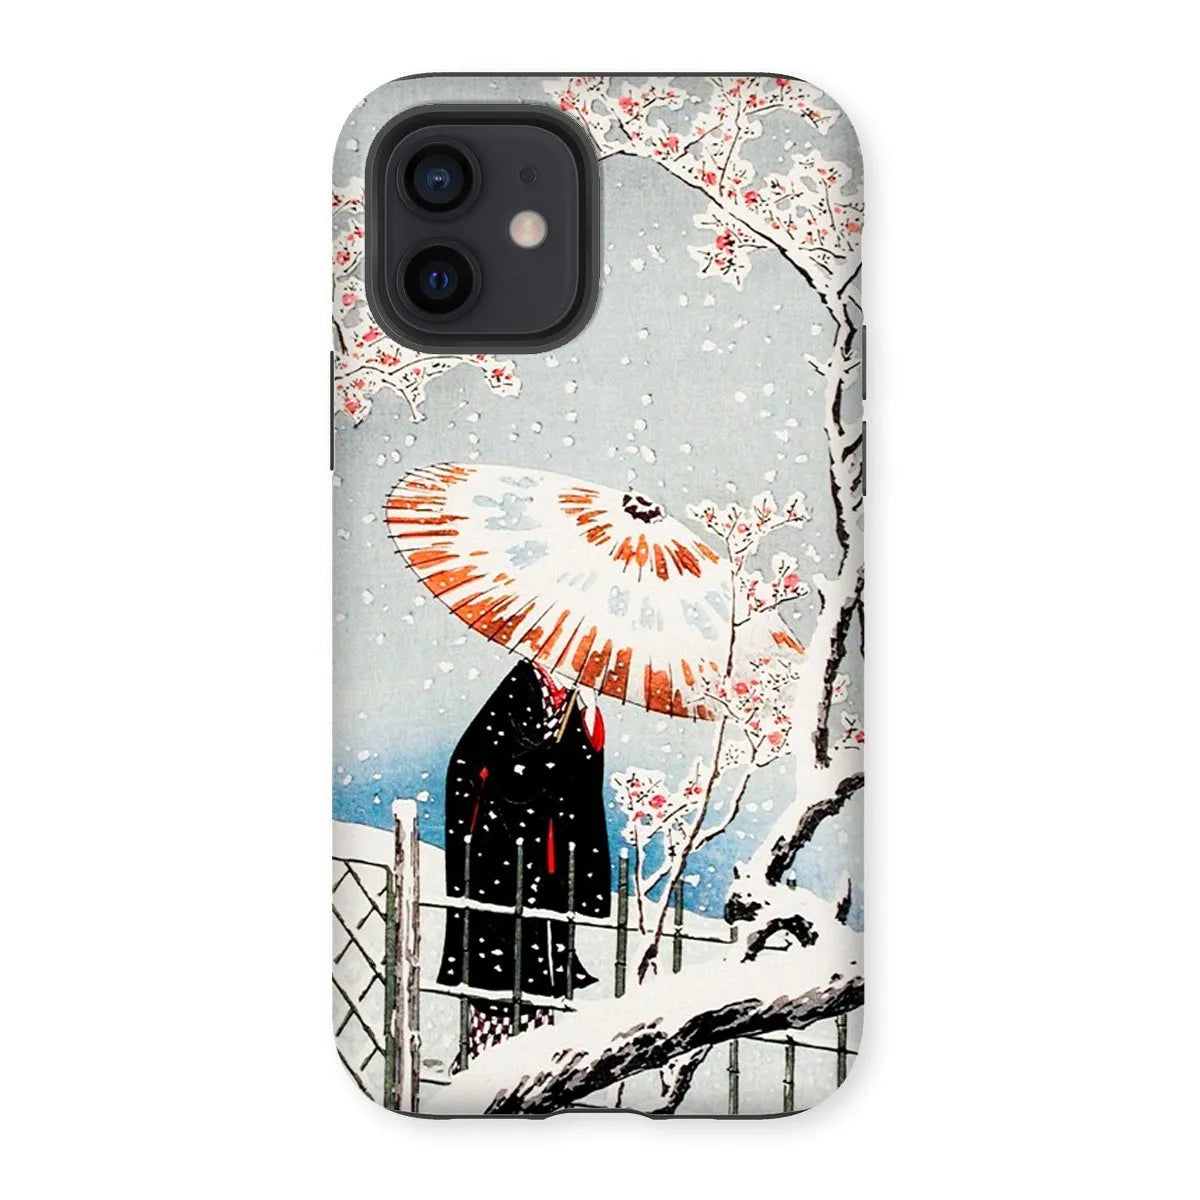 Plum Tree In Snow - Shin-hanga Phone Case - Hiroaki Takahashi - Iphone 12 / Matte - Mobile Phone Cases - Aesthetic Art